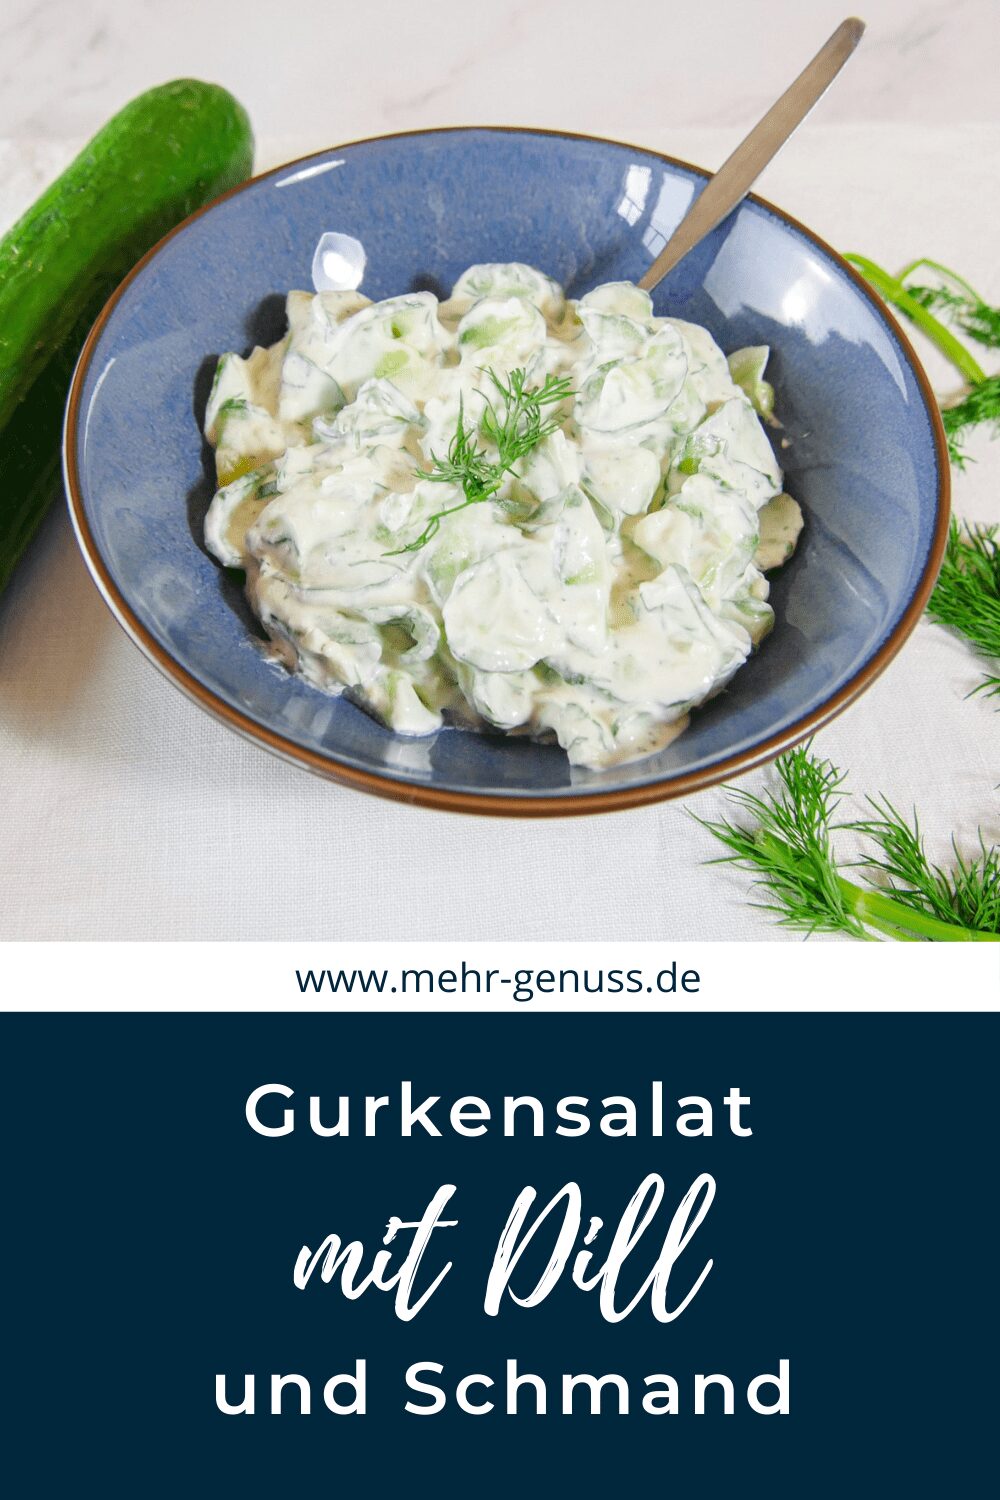 Gurkensalat mit Dill auf Pinterest